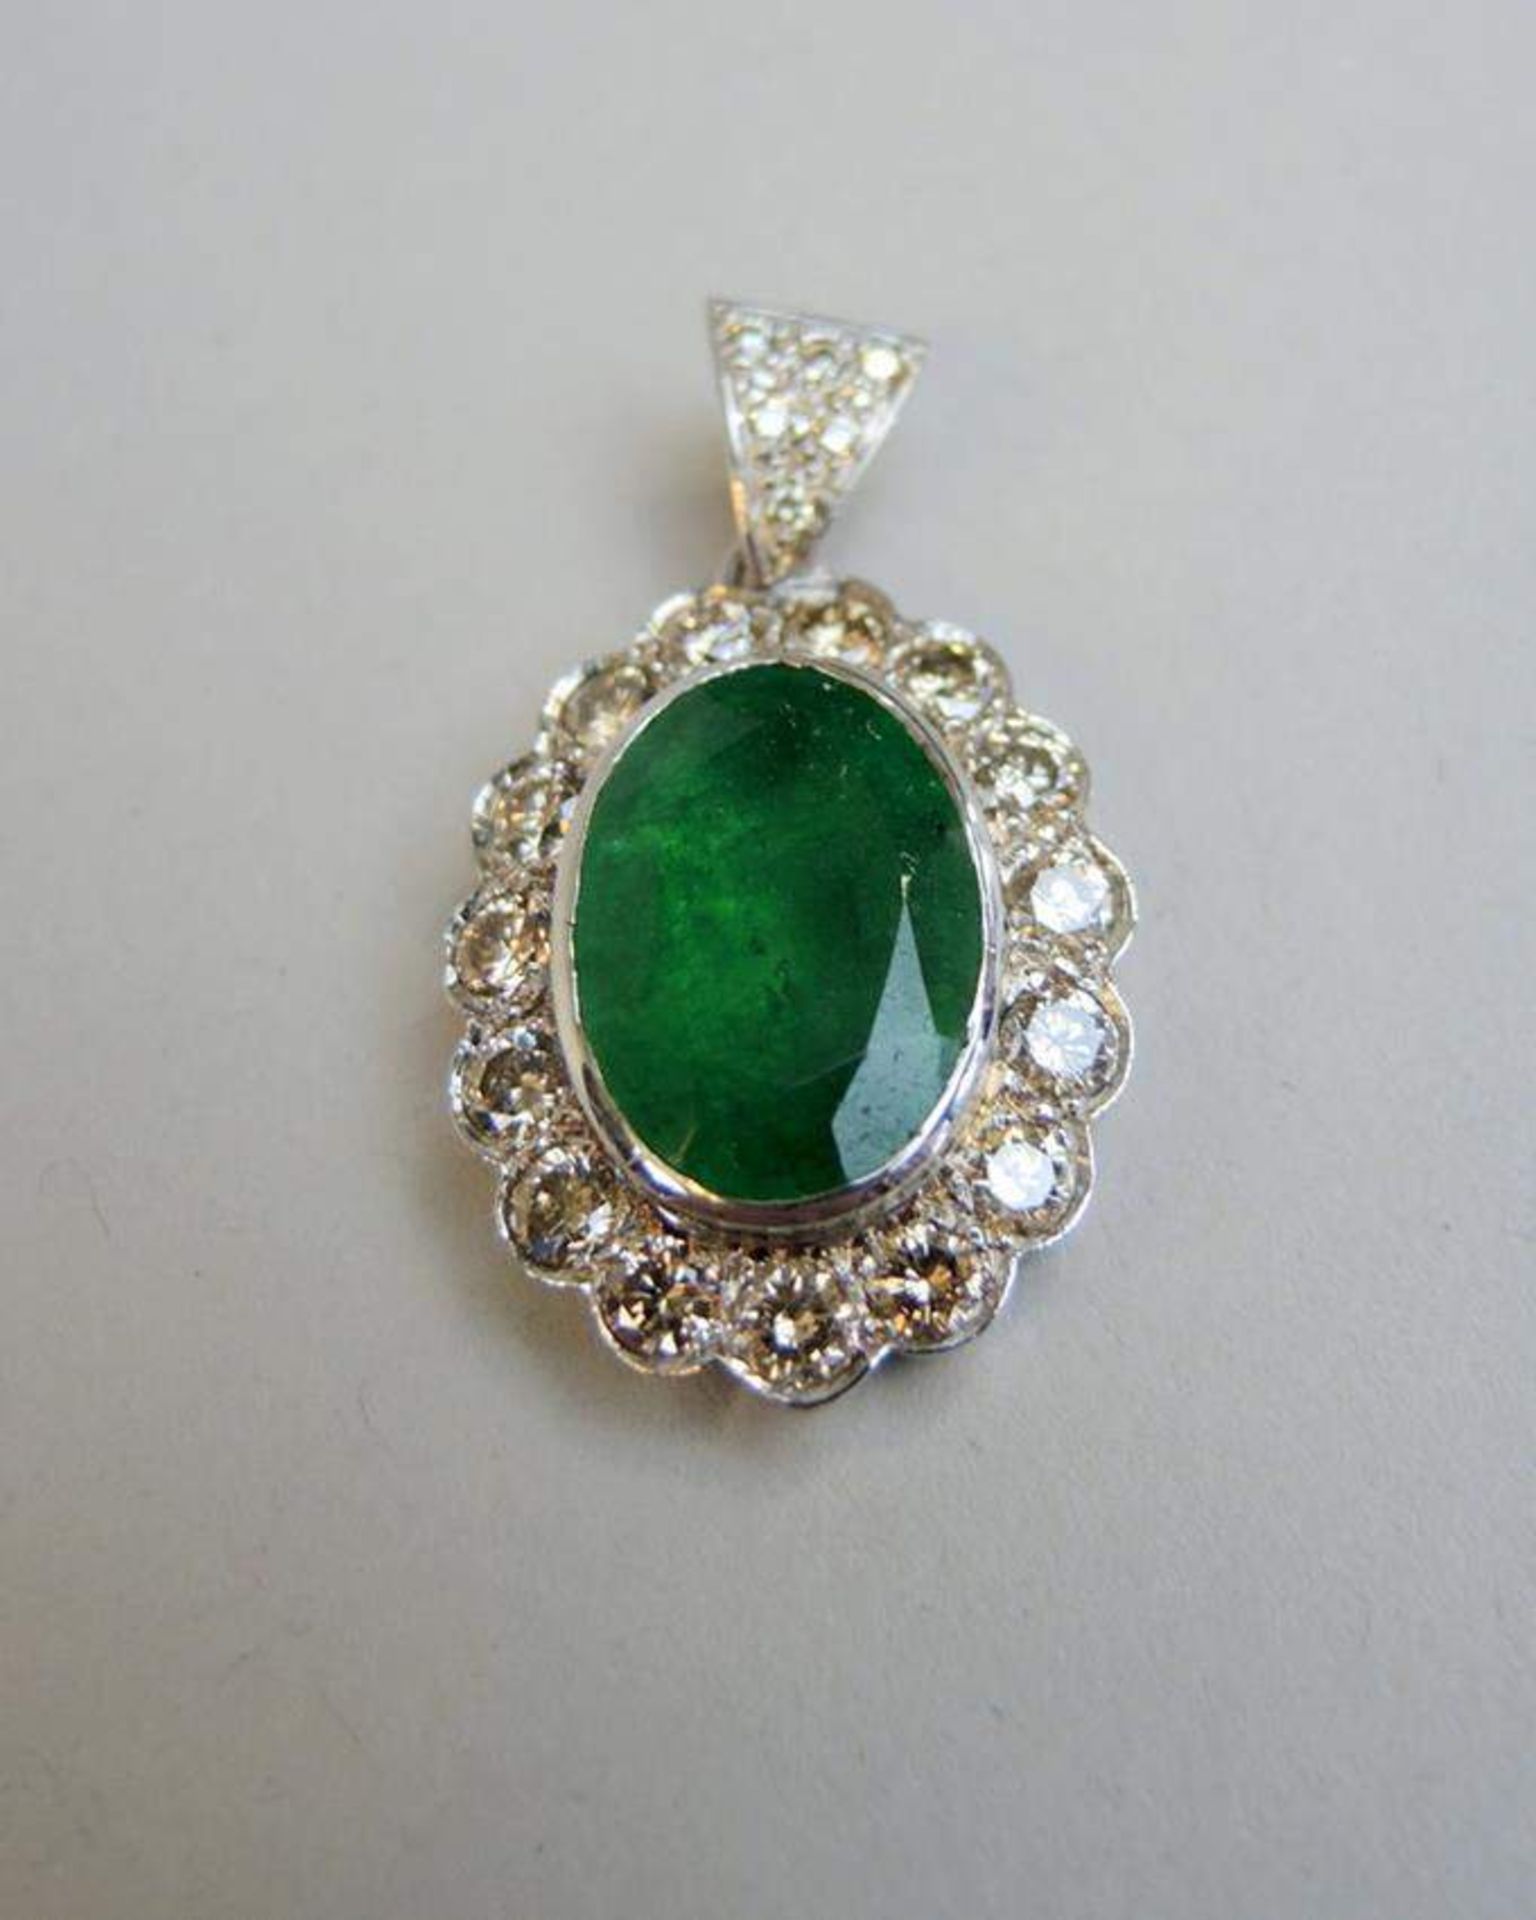 Großer Smaragd-DiamantanhängerGroßer Smaragd-Diamantanhänger, 18 kt. Weißgold, Smaragd von ca. 3